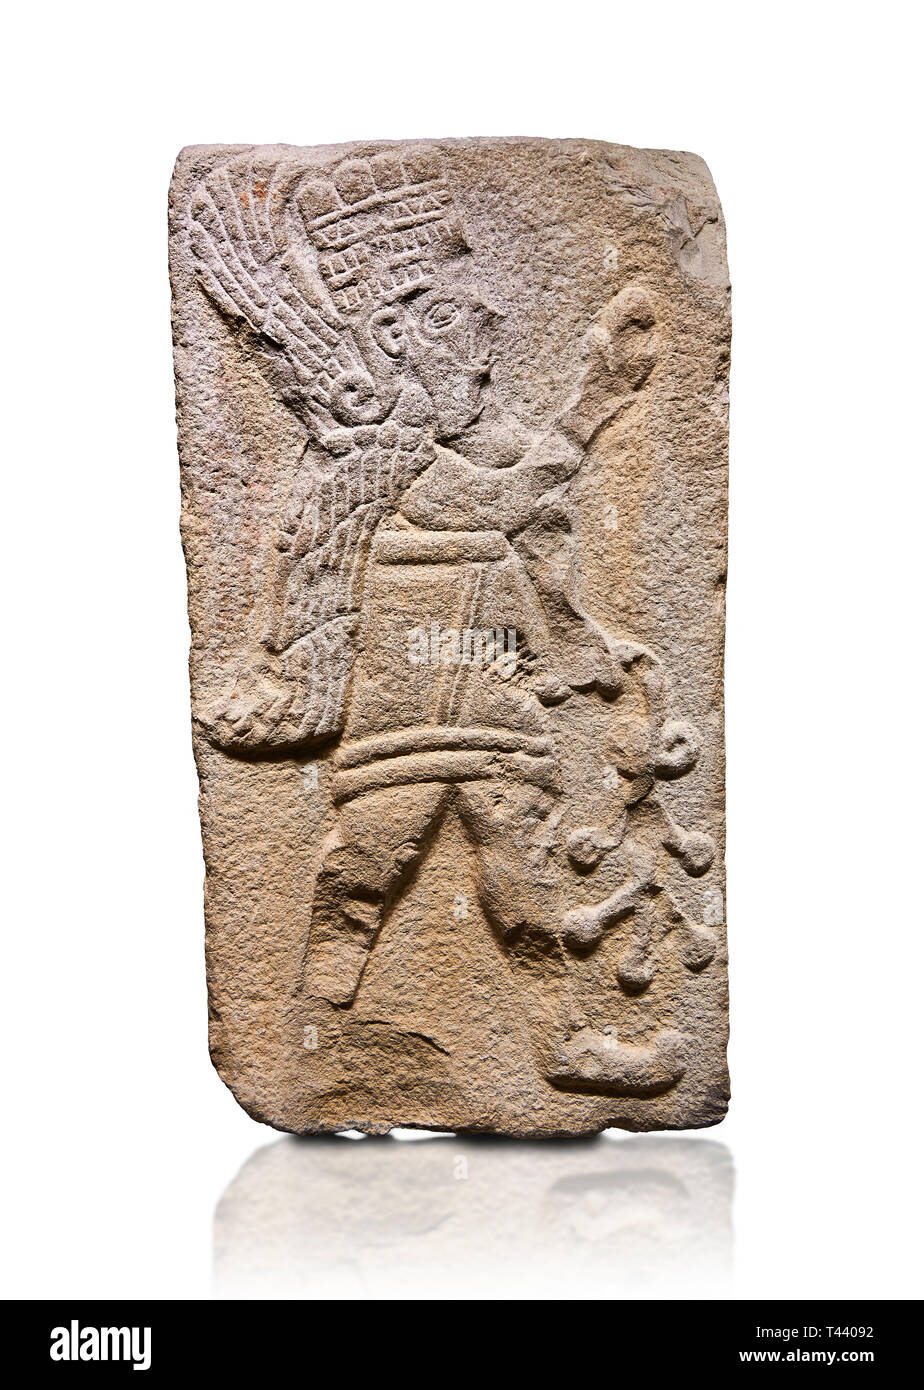 Aslantepe Hittita scolpita in rilievo orthostat pannello di pietra. Calcare, Aslantepe Malatya, 1200-700 A.C. Anatolica Civilisations Museum, Ankara, Turchia. W Foto Stock